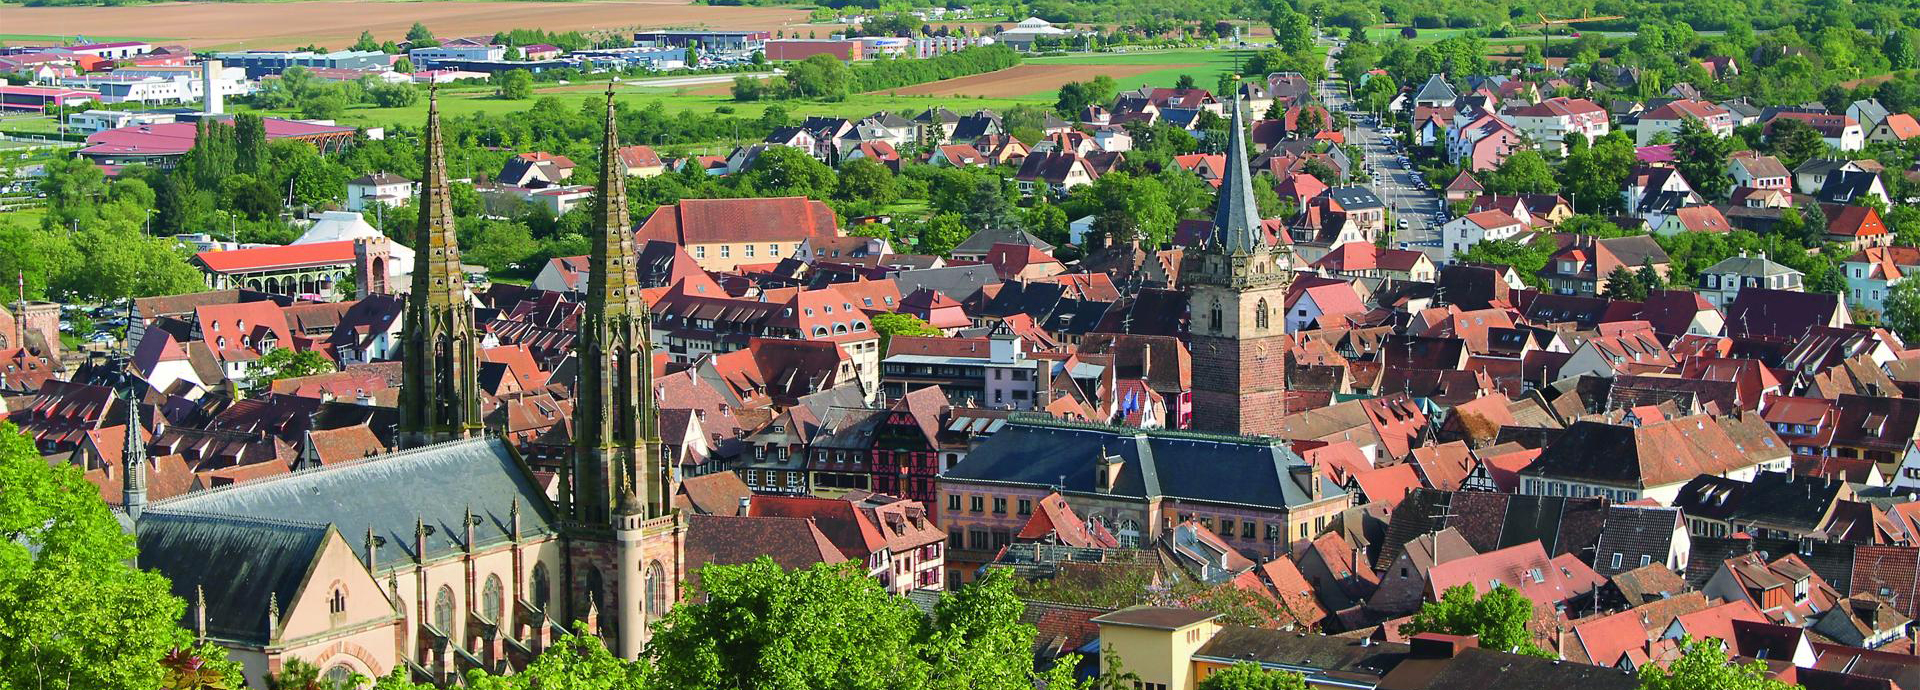 Obernai, a tourist attraction in Alsace